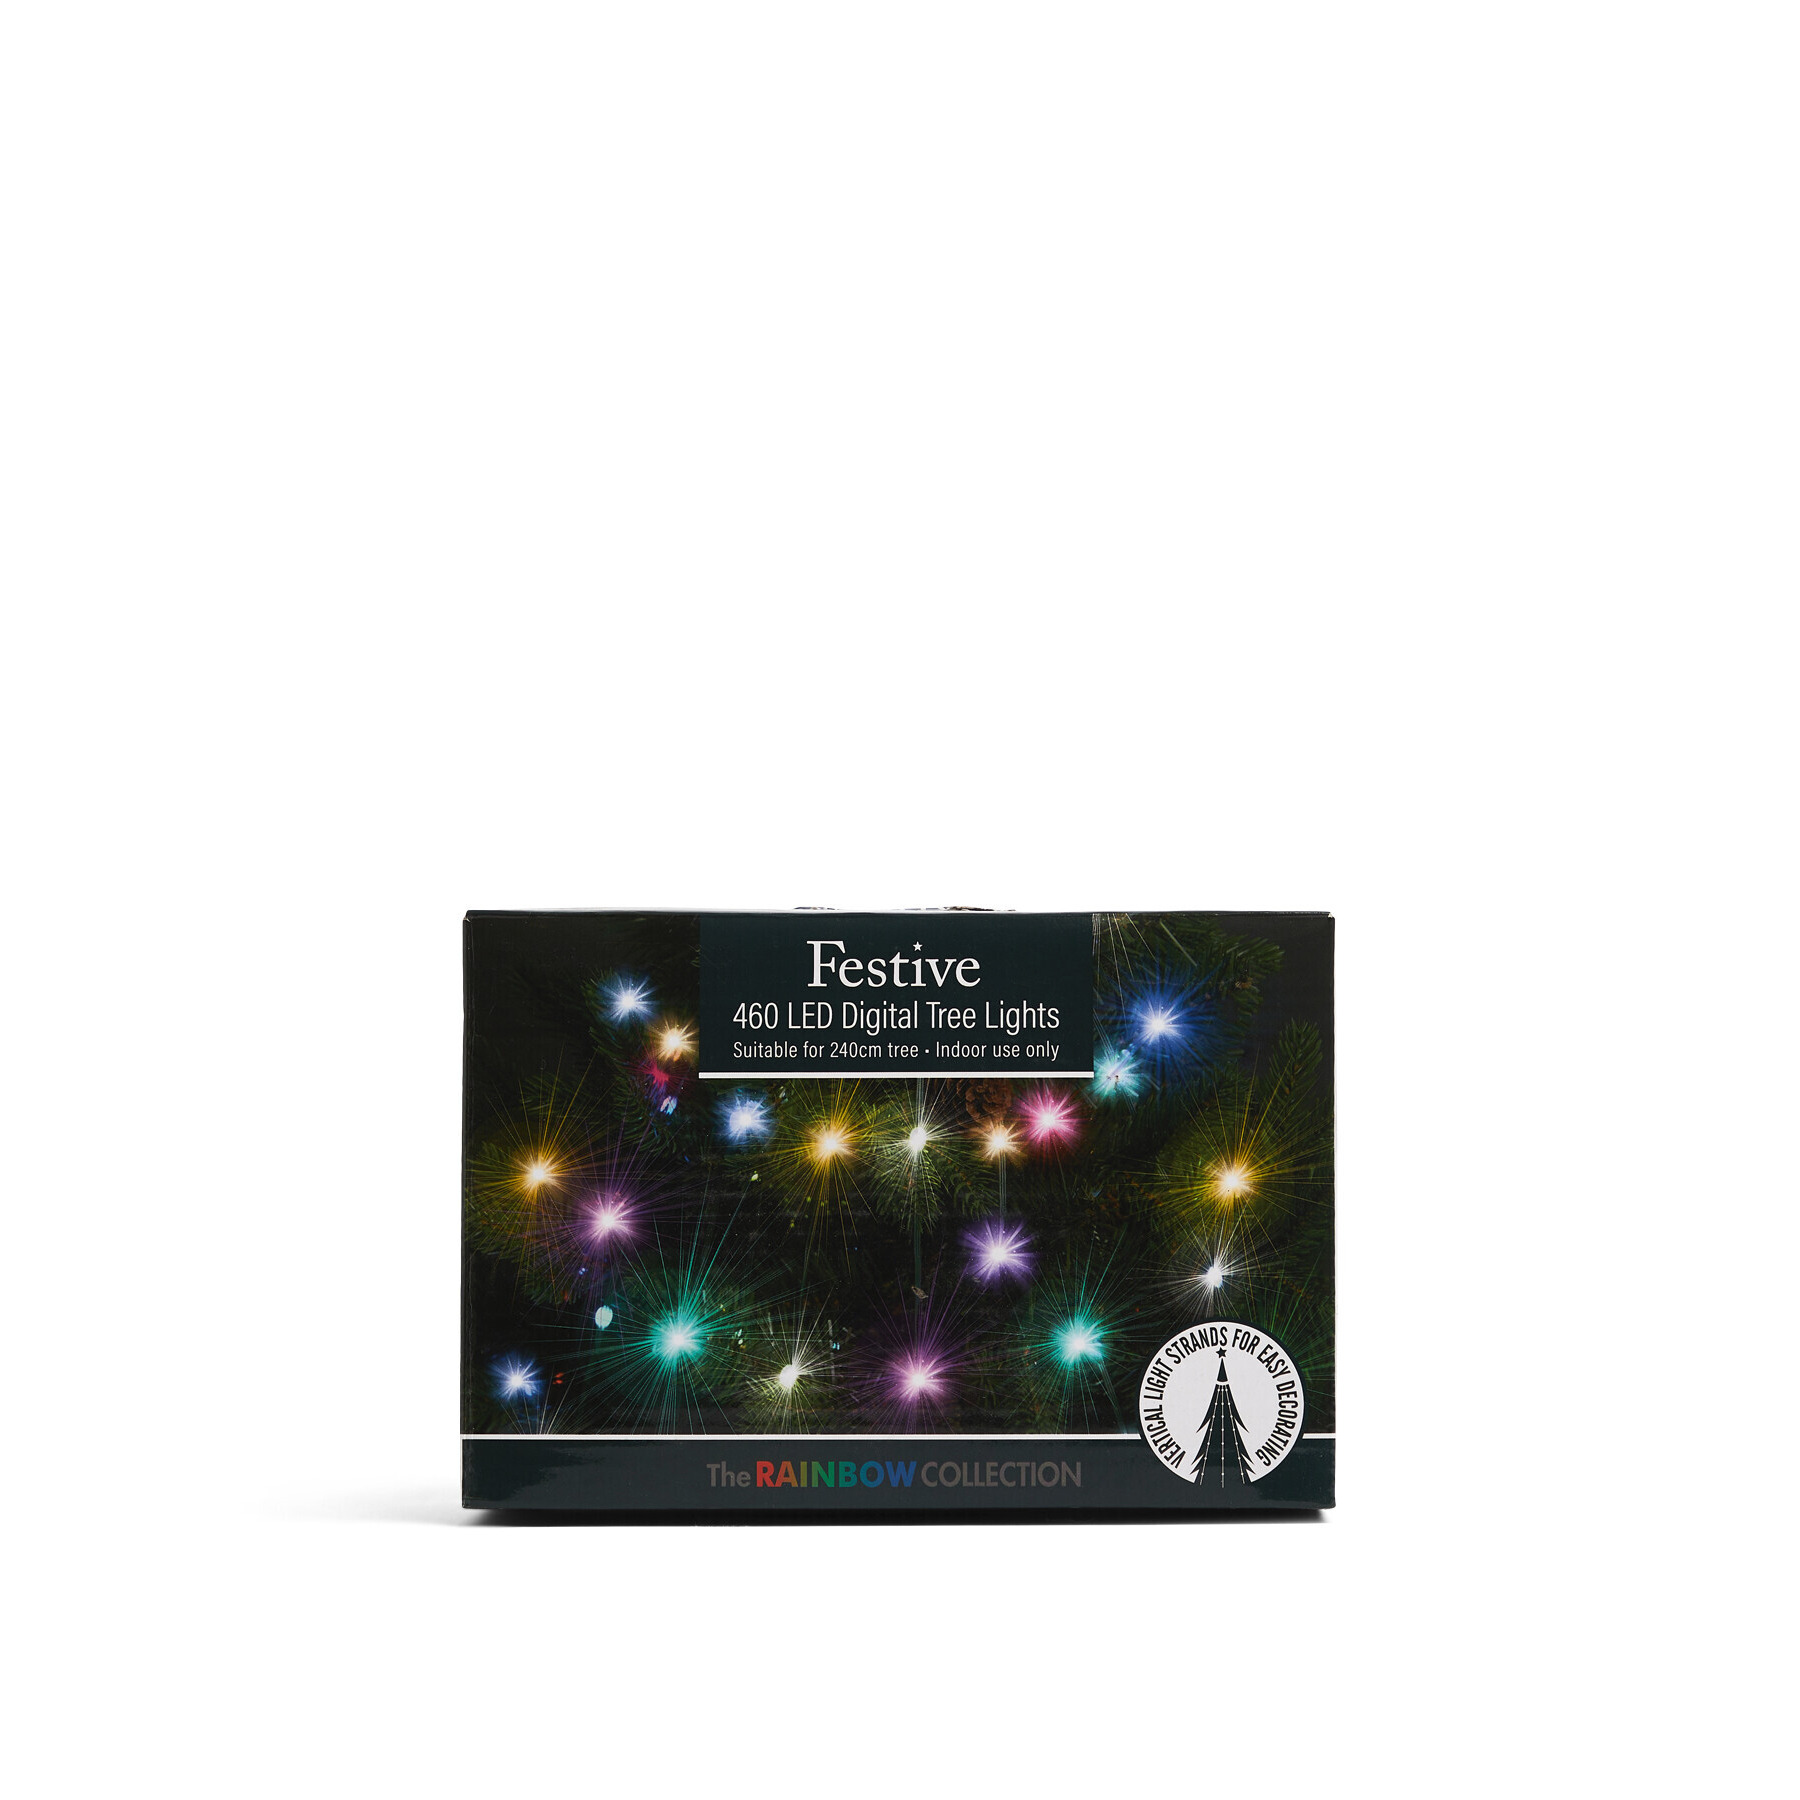 Christmas 460 LED Digital Tree Lights - image 1